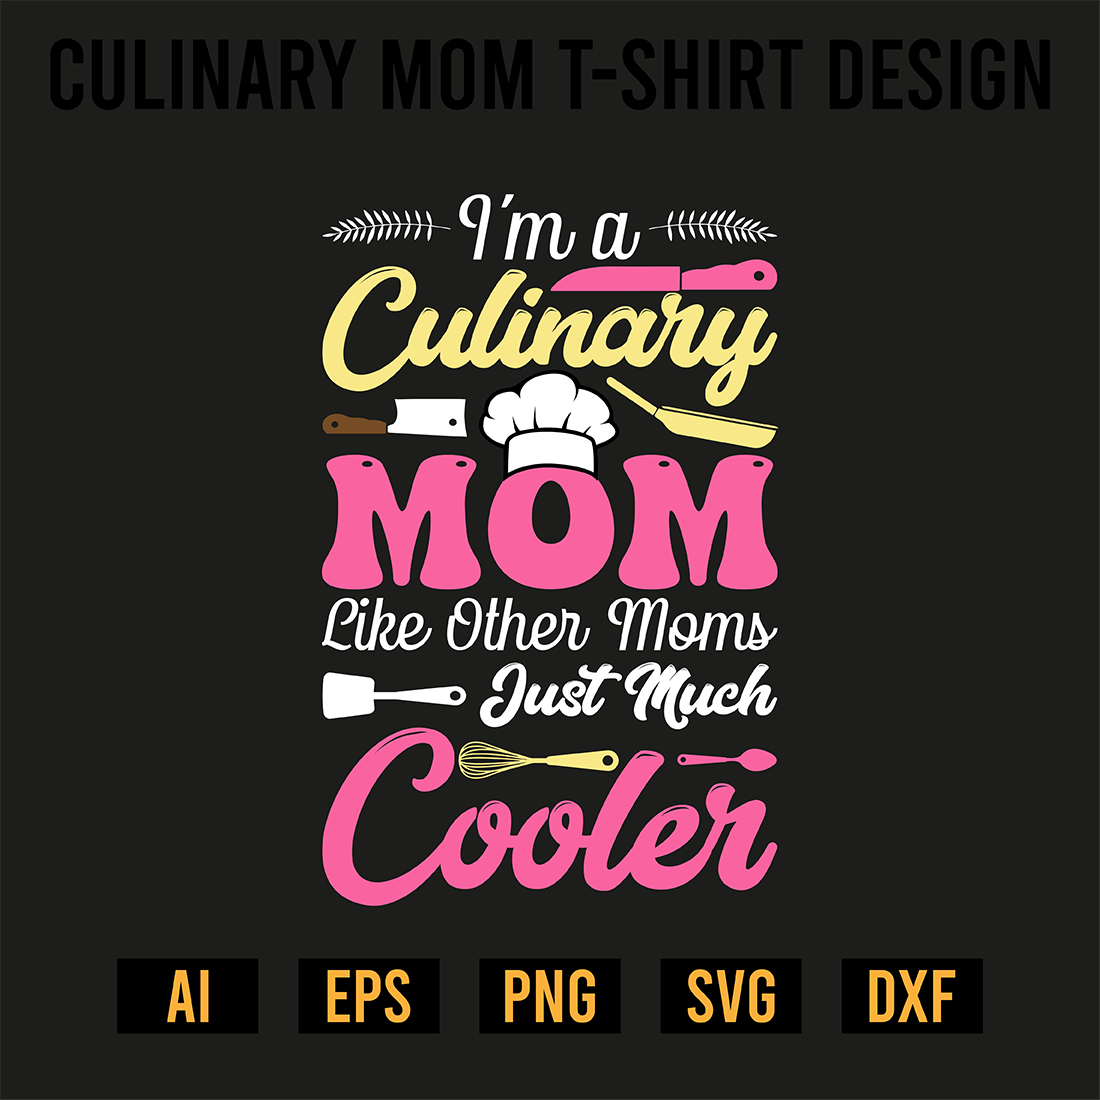 Culinary Mom T-Shirt Design preview image.